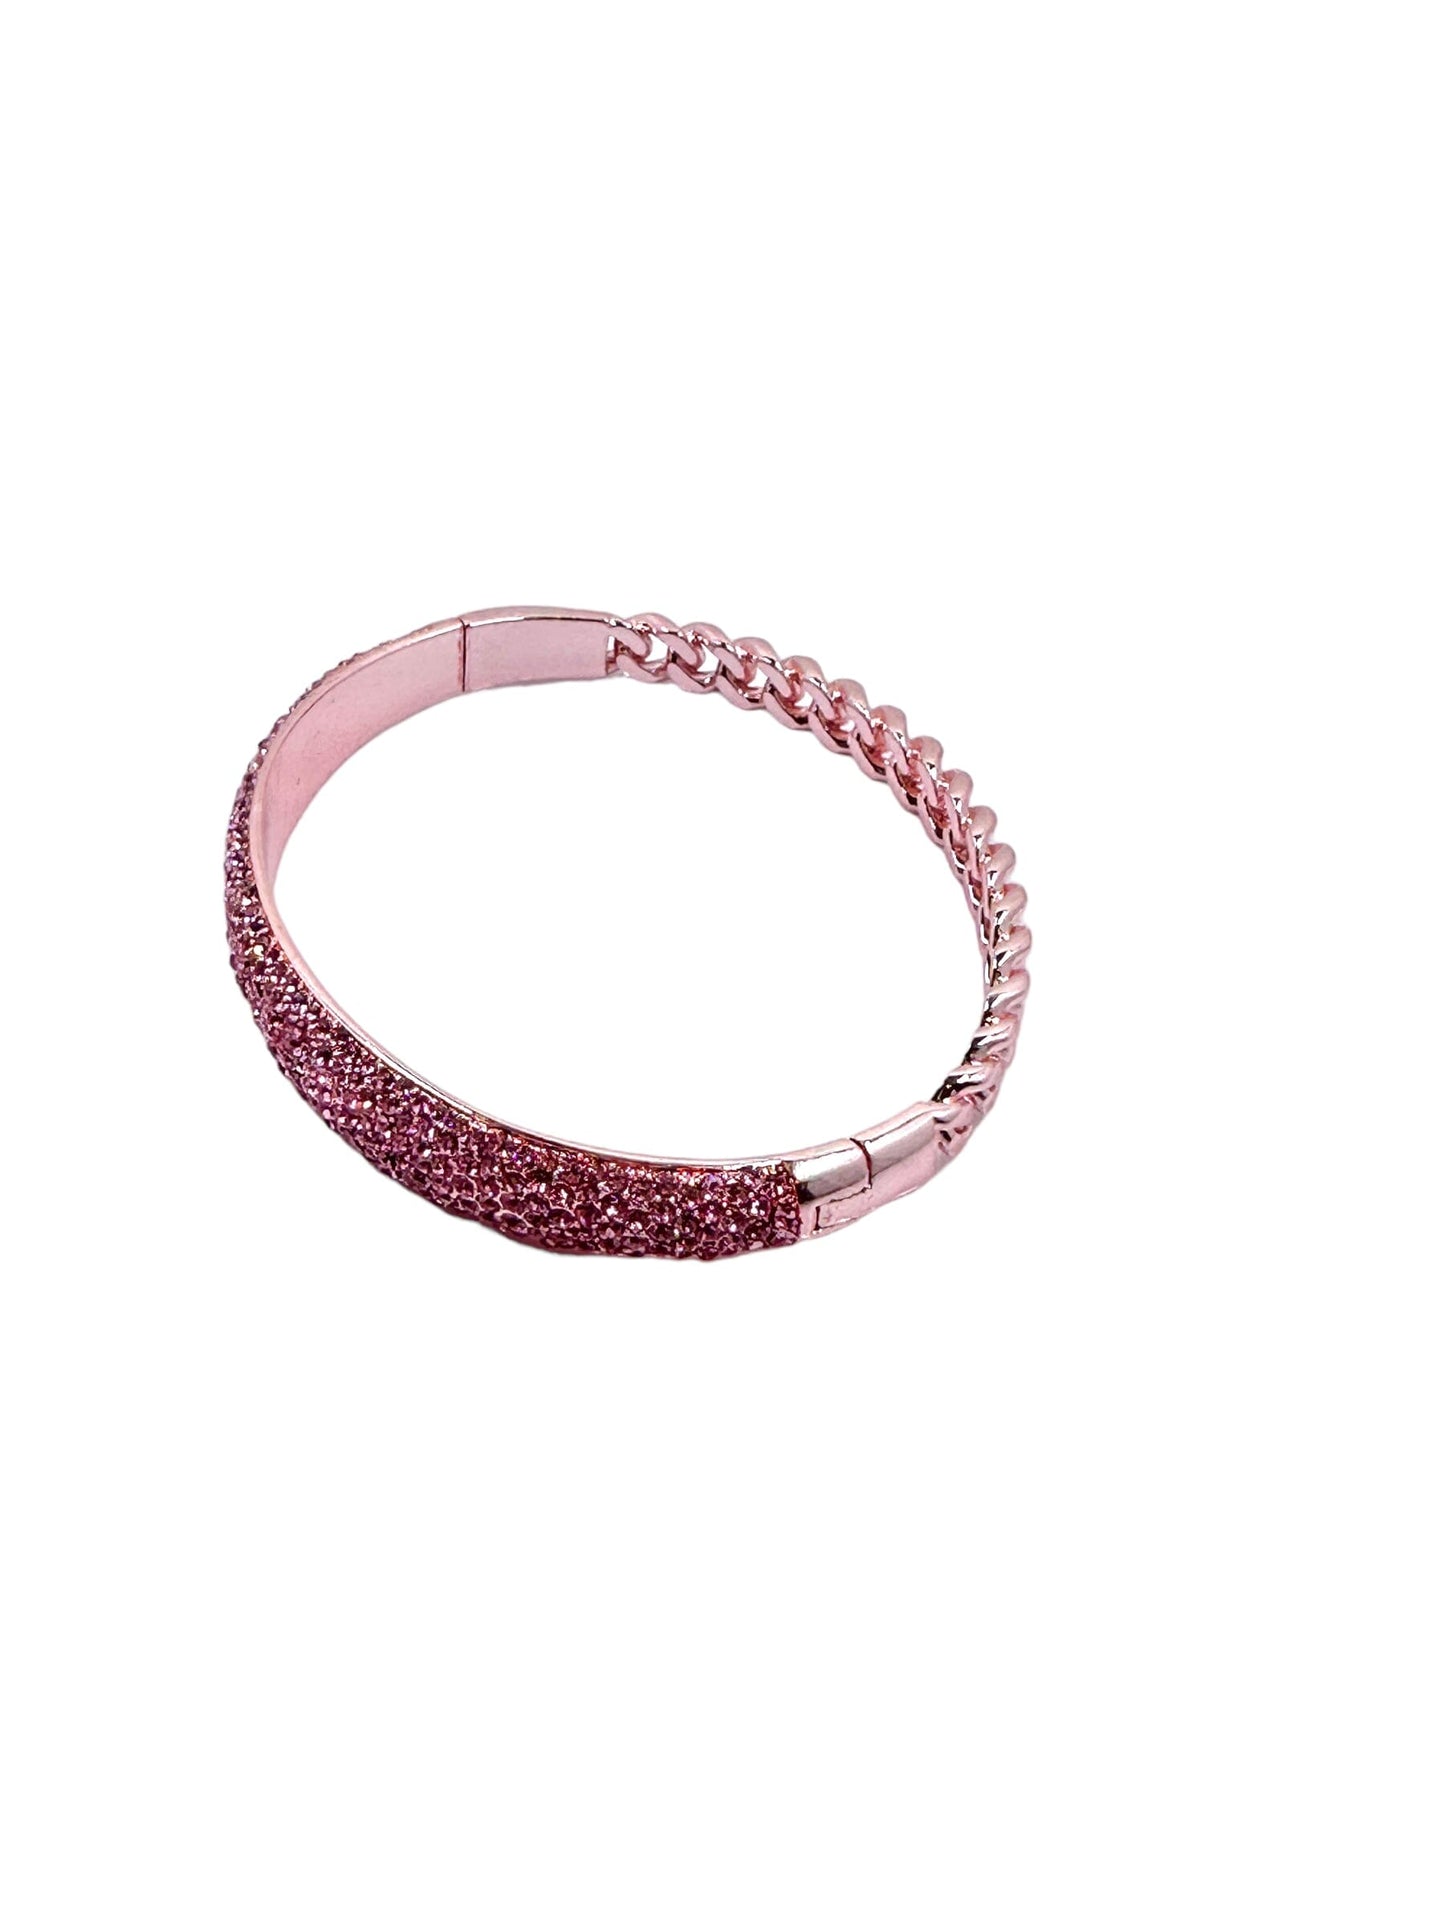 Sarah Pink Pave Chain Bracelet Bracelets TRENDZIO 